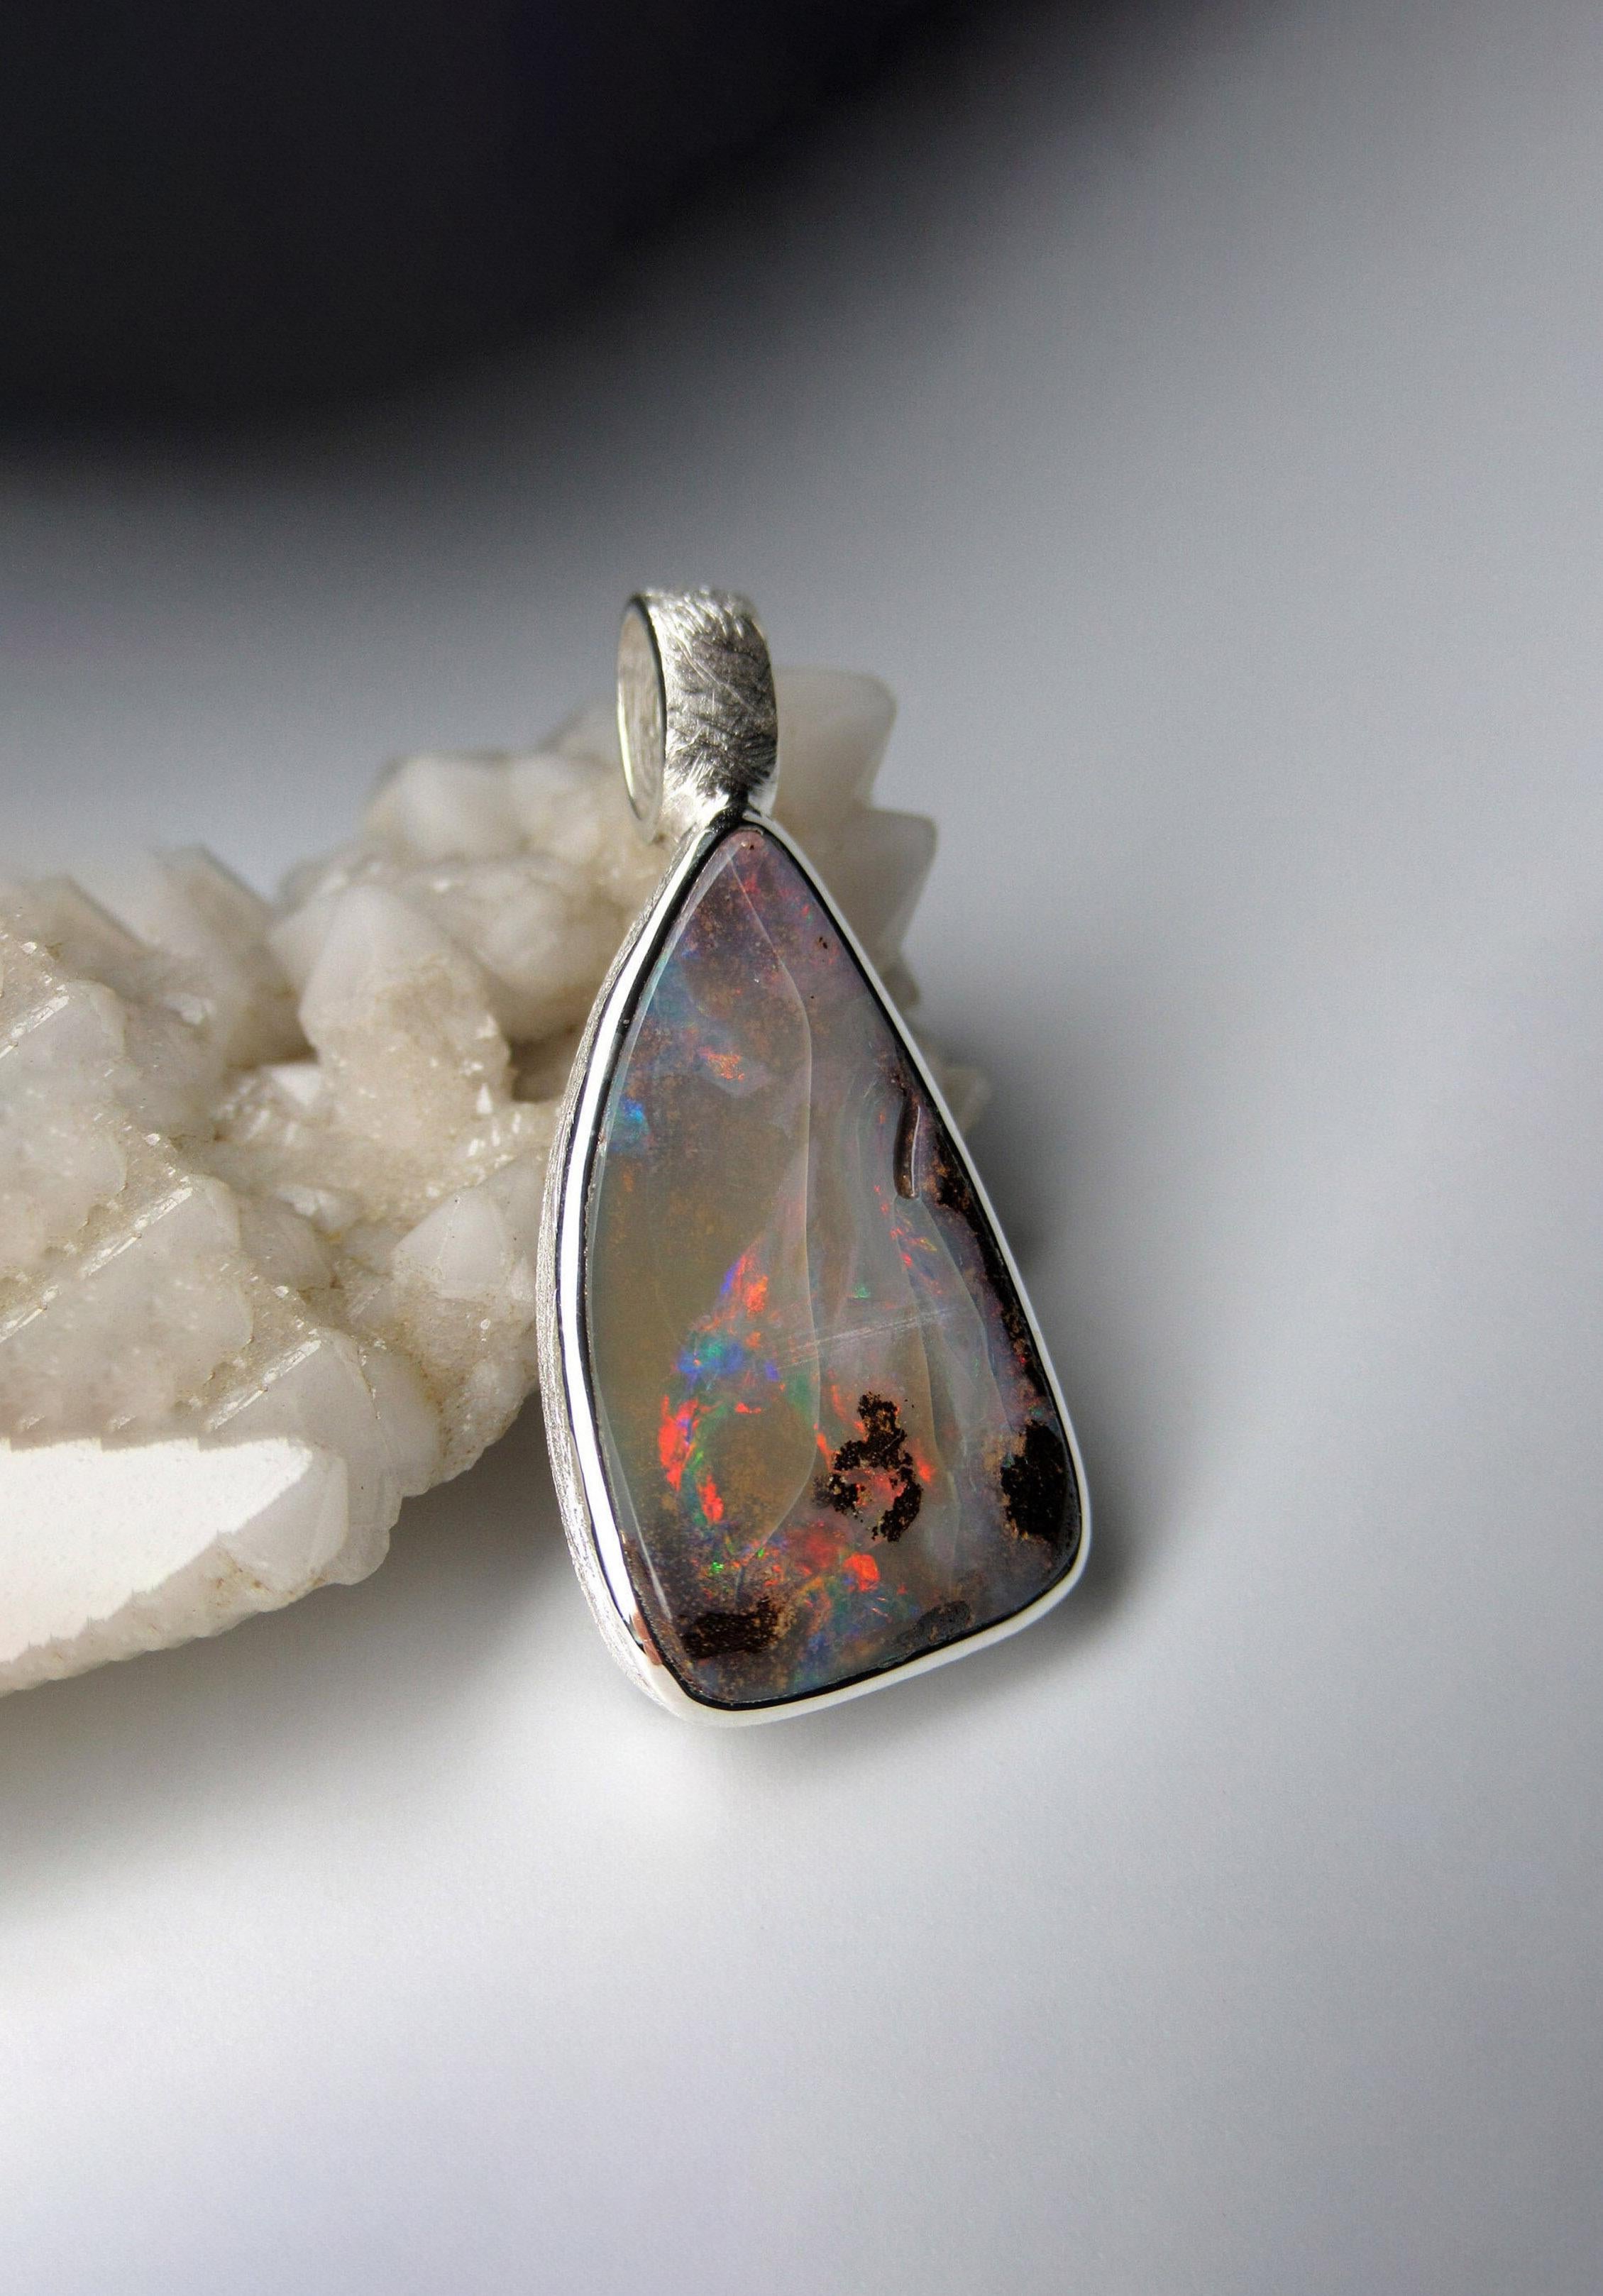 Boulder Opal pendant in matte finish silver 
gemstone origin - Australia
opal measurements - 0.16 x 0.55 x 0.98 in / 4 x 14 x 25 mm
opal weight - 11.25 carats
pendant length - 1.3 in / 33 mm
pendant  weight - 4.87 grams